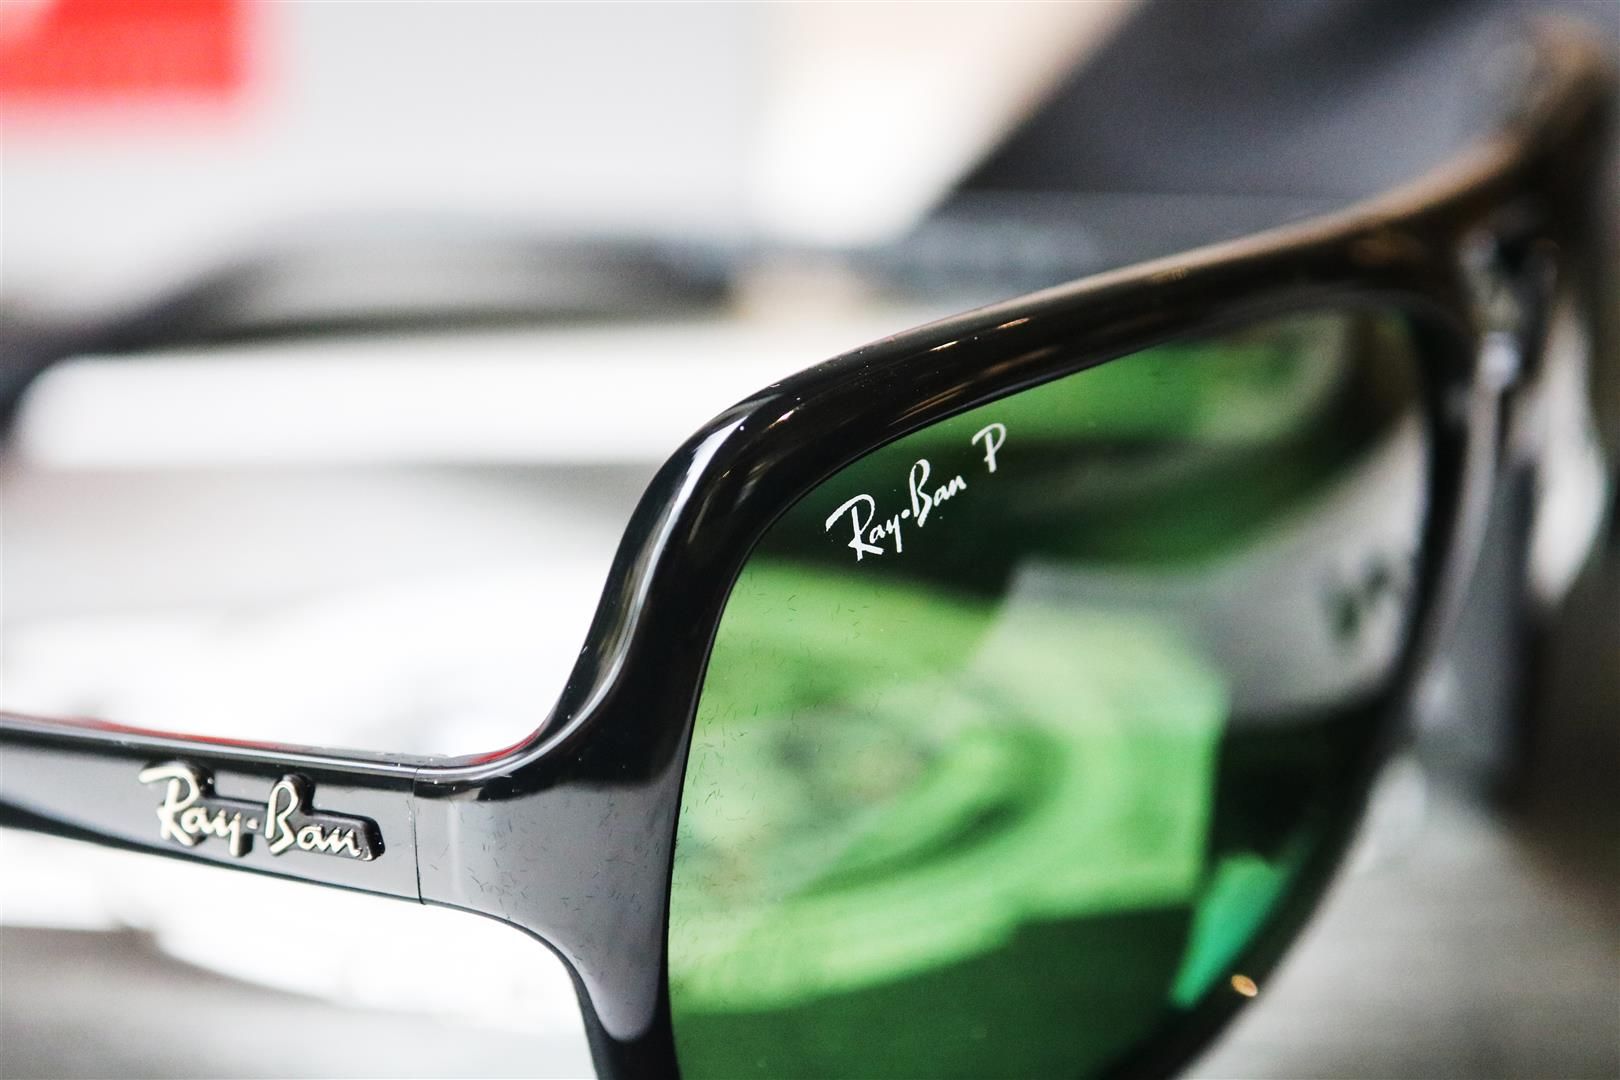 Mắt kính RAY BAN Polarized Green Classic G-15 Aviator Sunglasses Ite –  mhwatchvn